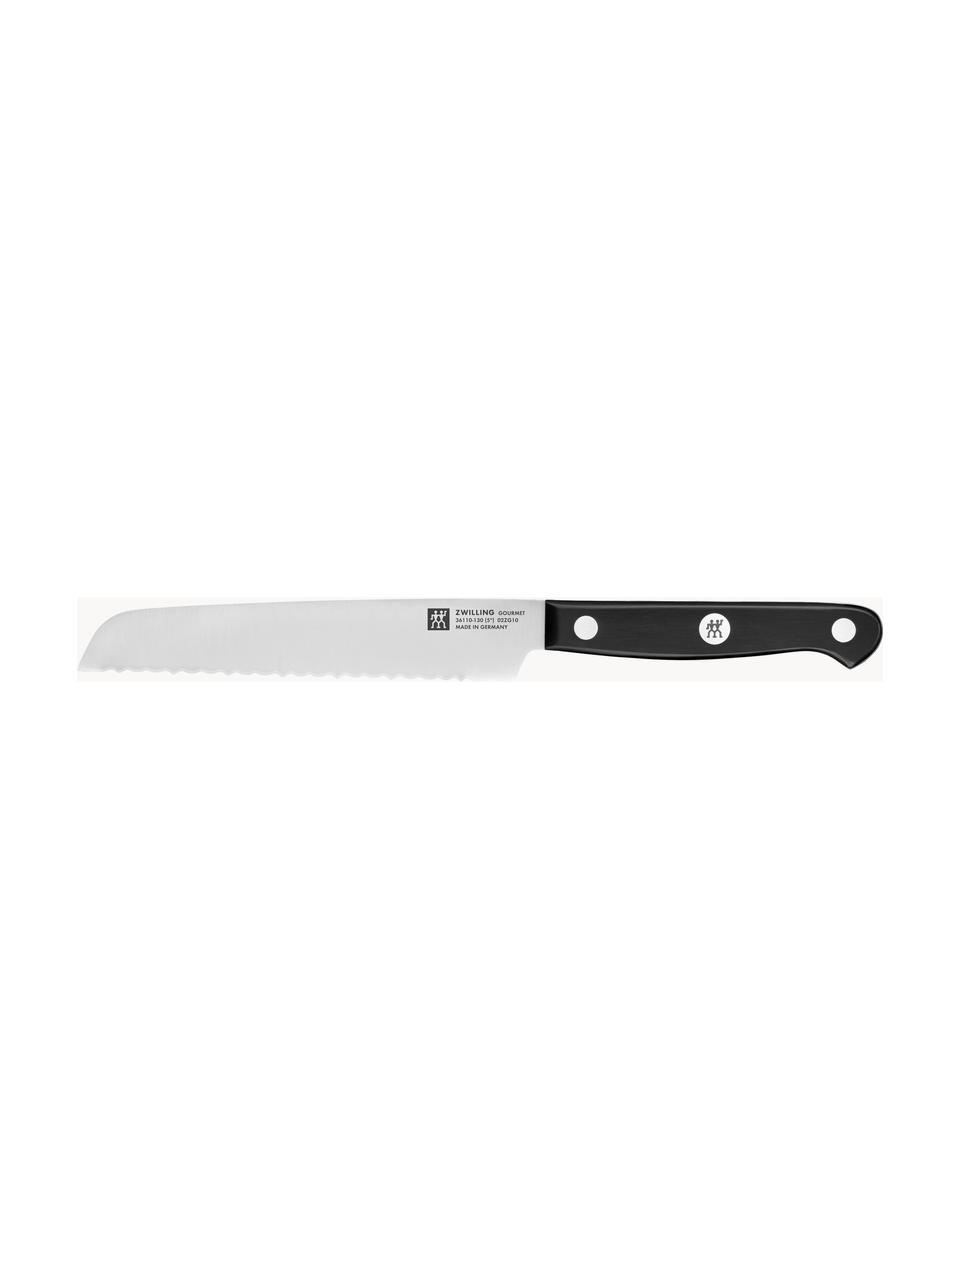 Bloque de cuchillos autoafilables Gourmet, 7 pzas., Cuchillo: acero inoxidable, Marrón, negro, Set de diferentes tamaños